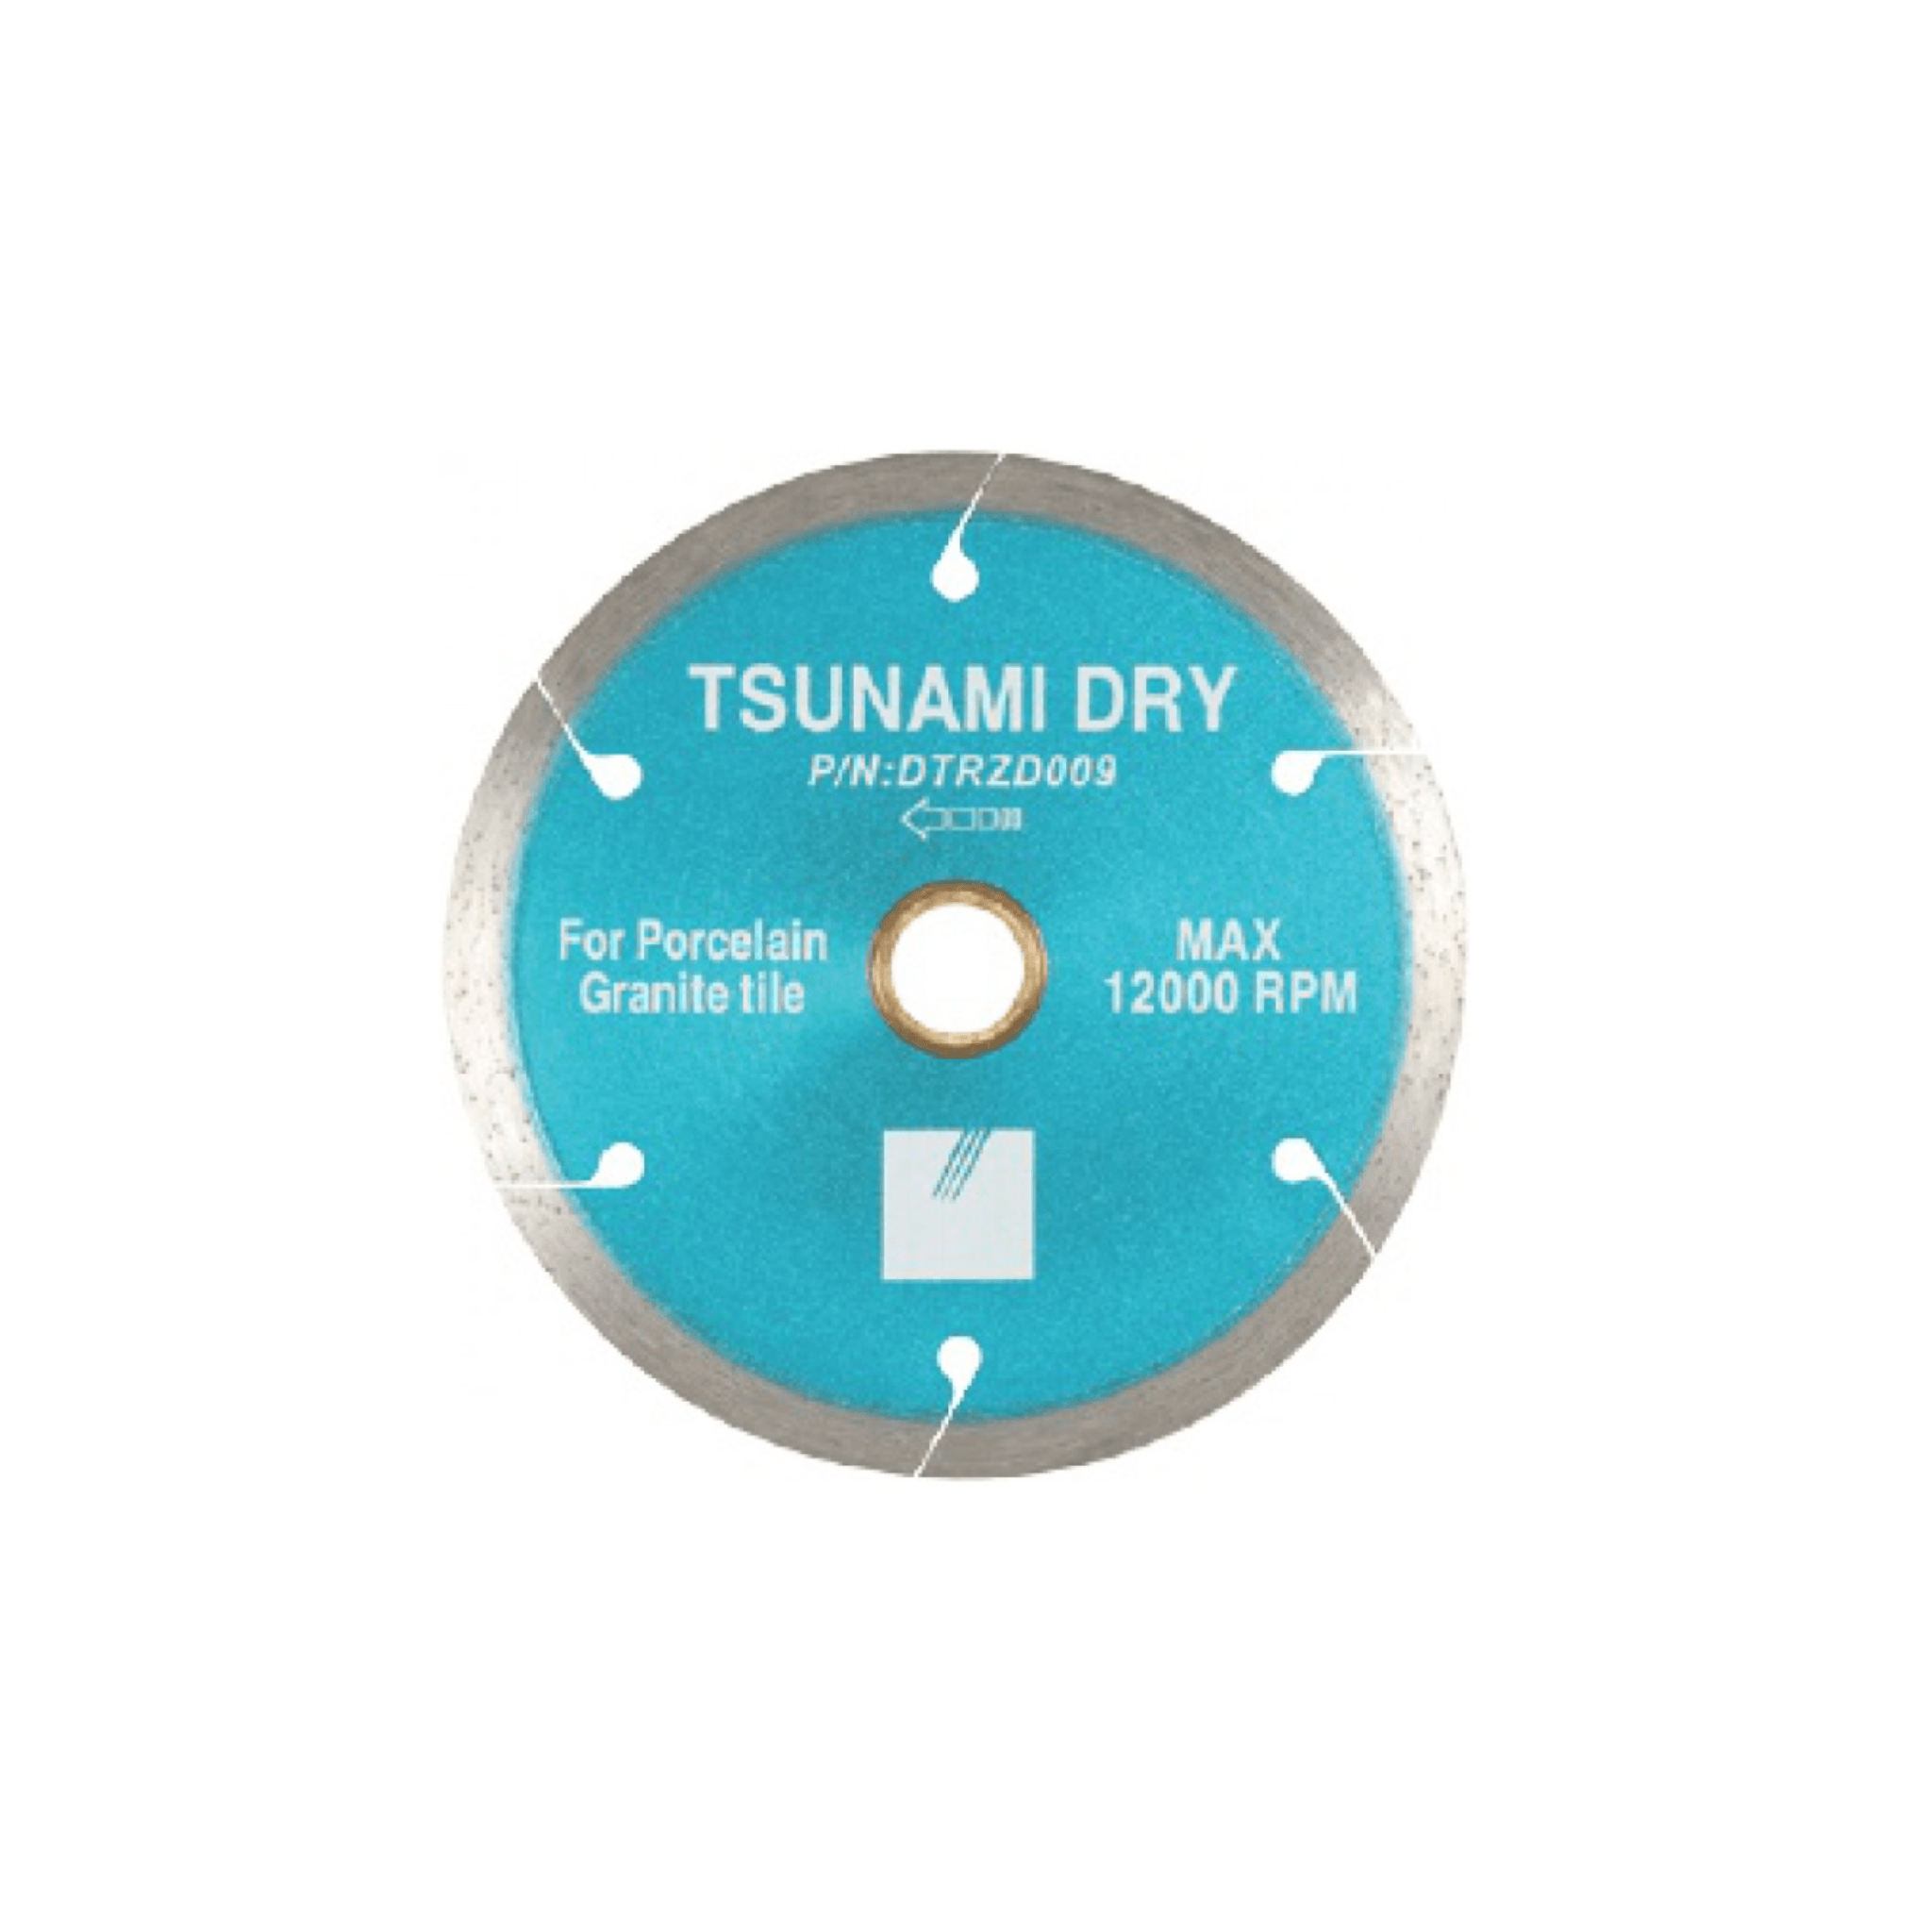 Disco Tsunami Dry 5" - Direct Stone Tool Supply, Inc